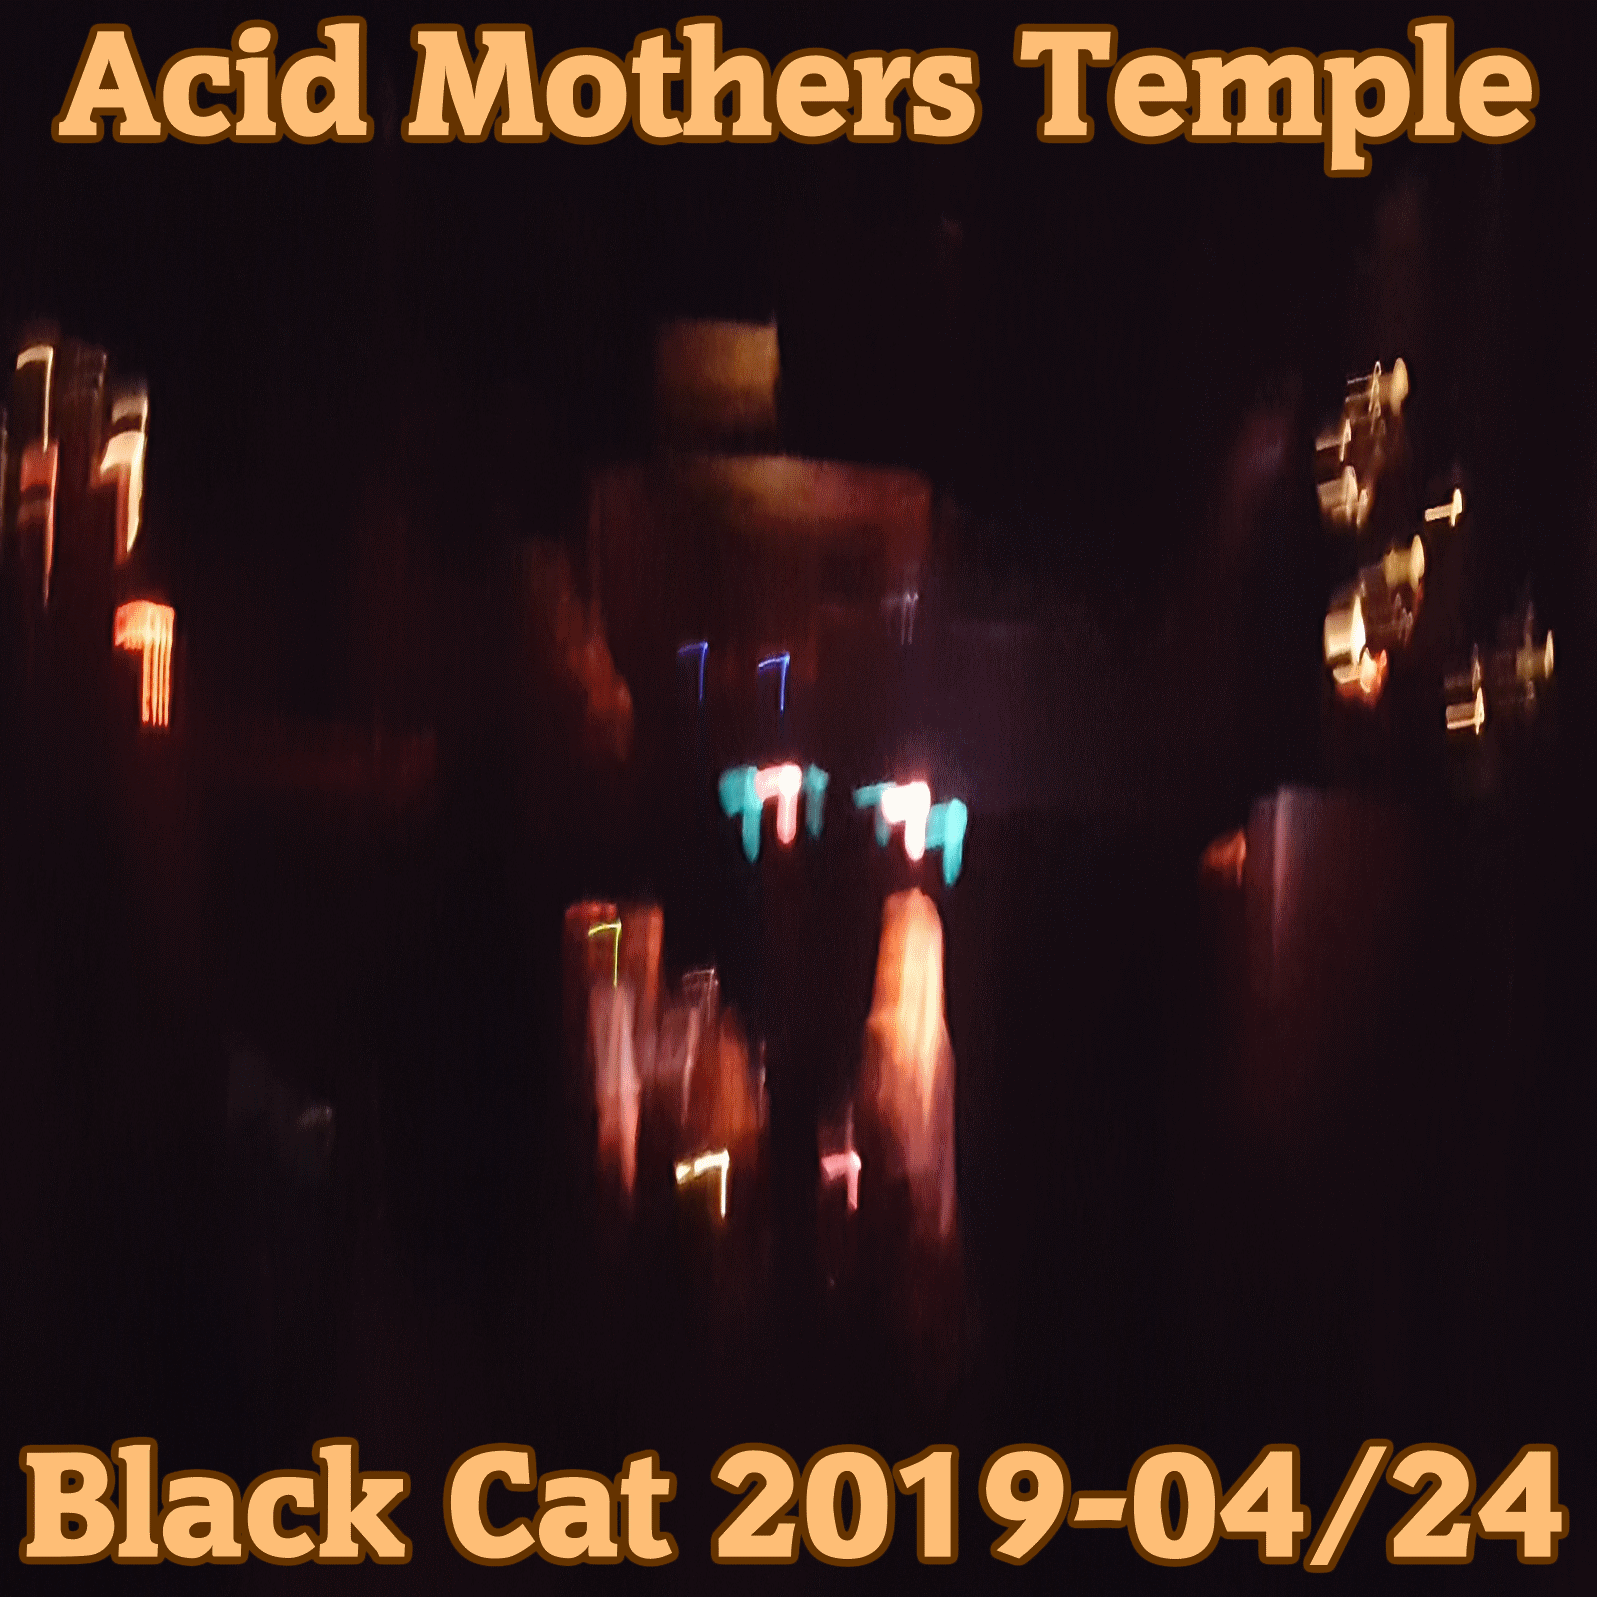 AcidMothersTemple2019-04-24BlackCatWashingtonDC.png